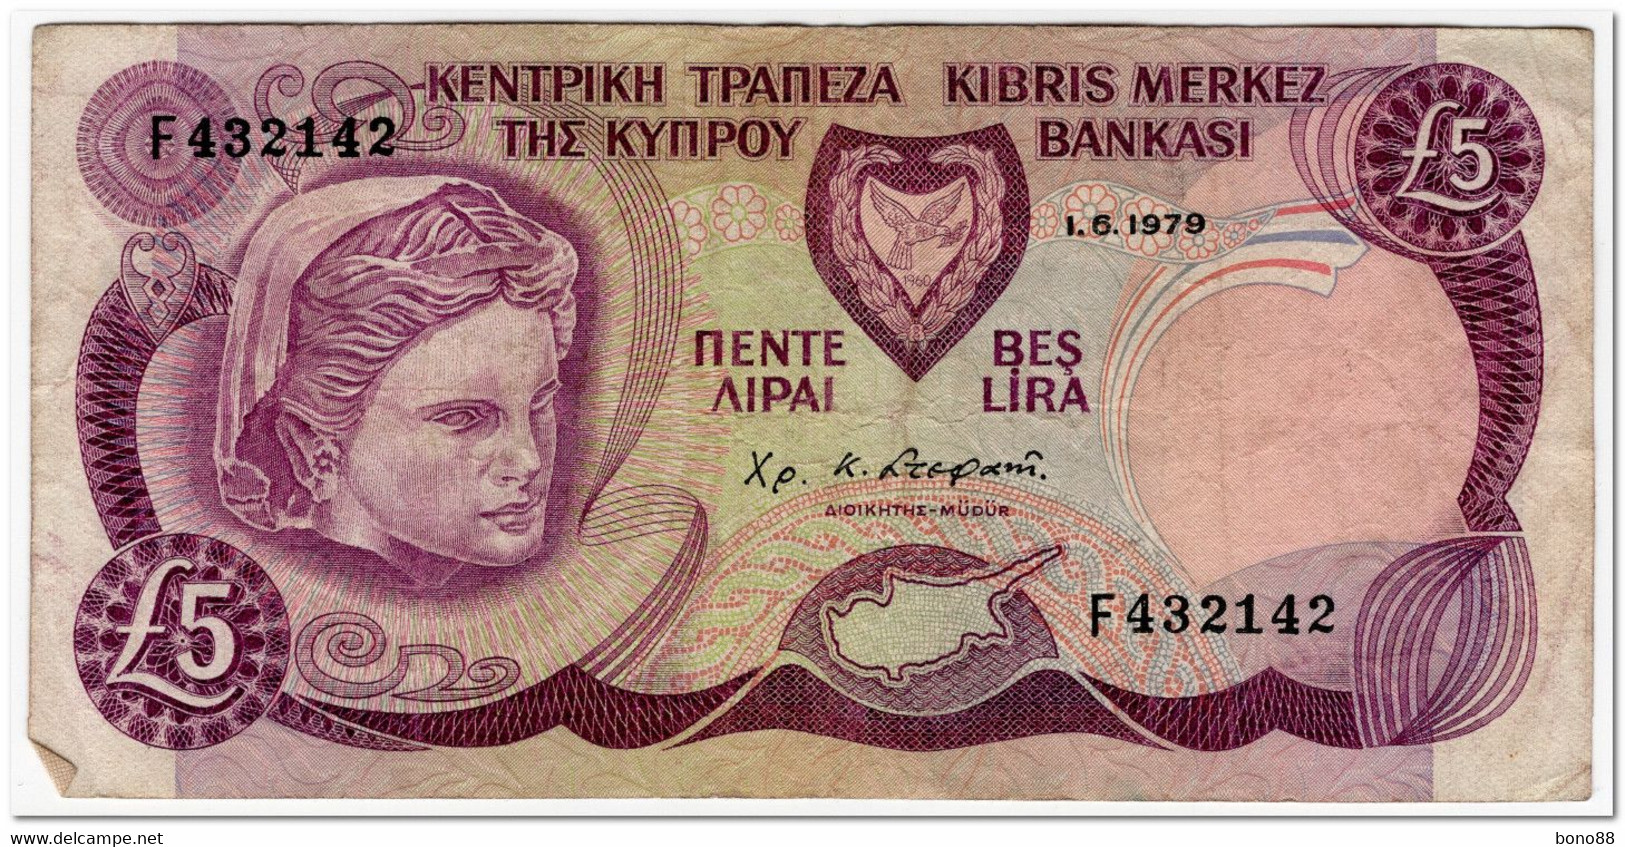 CYPRUS,5 POUNDS,1979,P.47,F+ - Cyprus